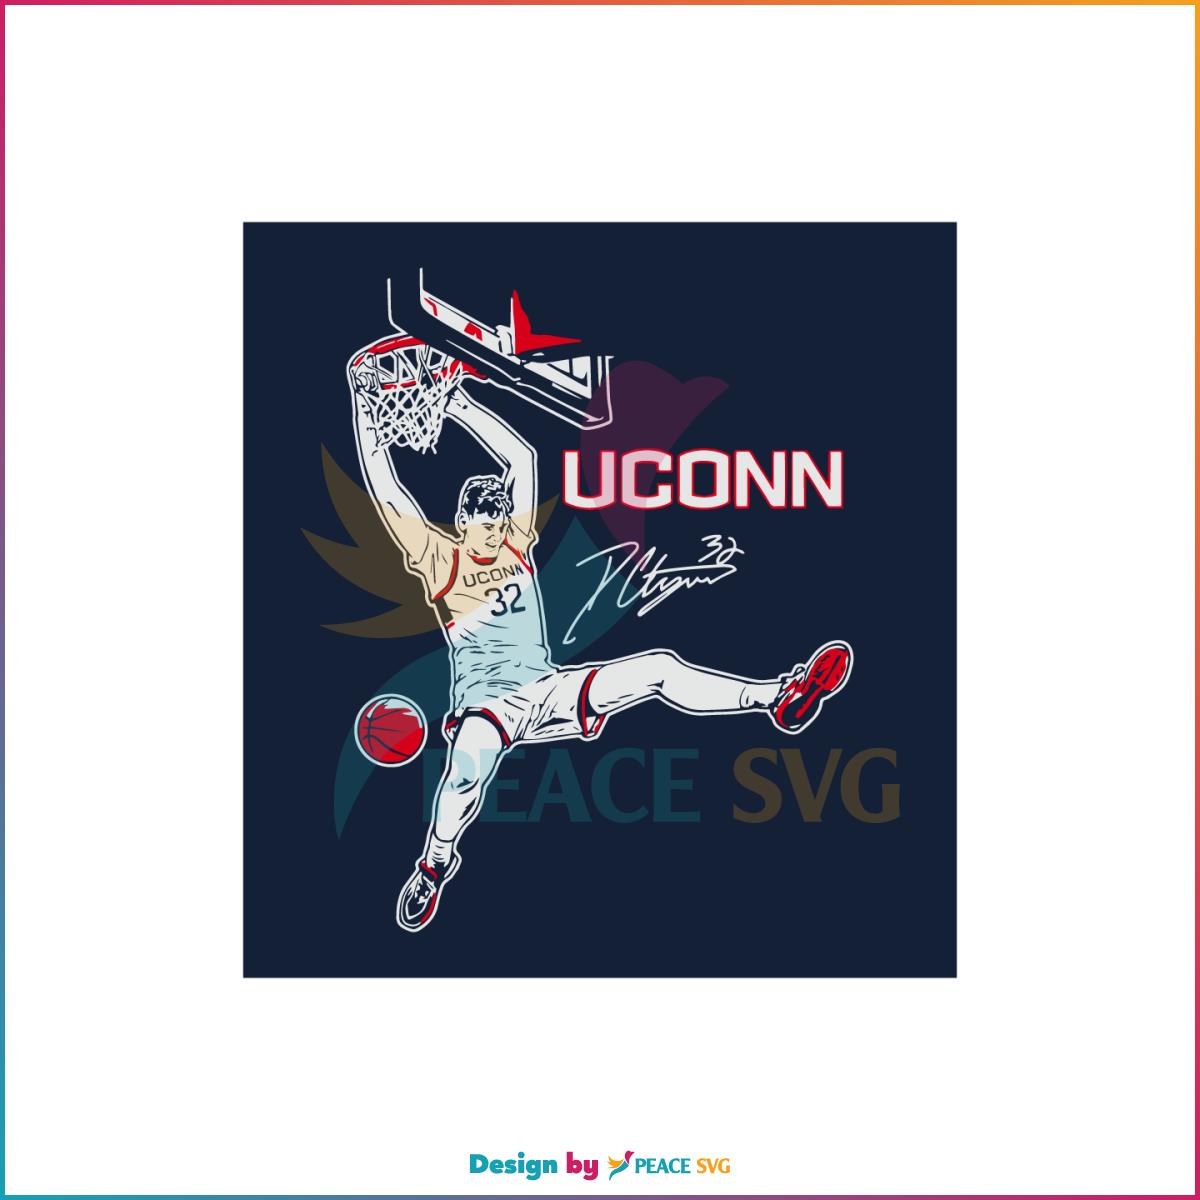 Uconn Basketball Donovan Clingan Signature Slam SVG Cutting Files